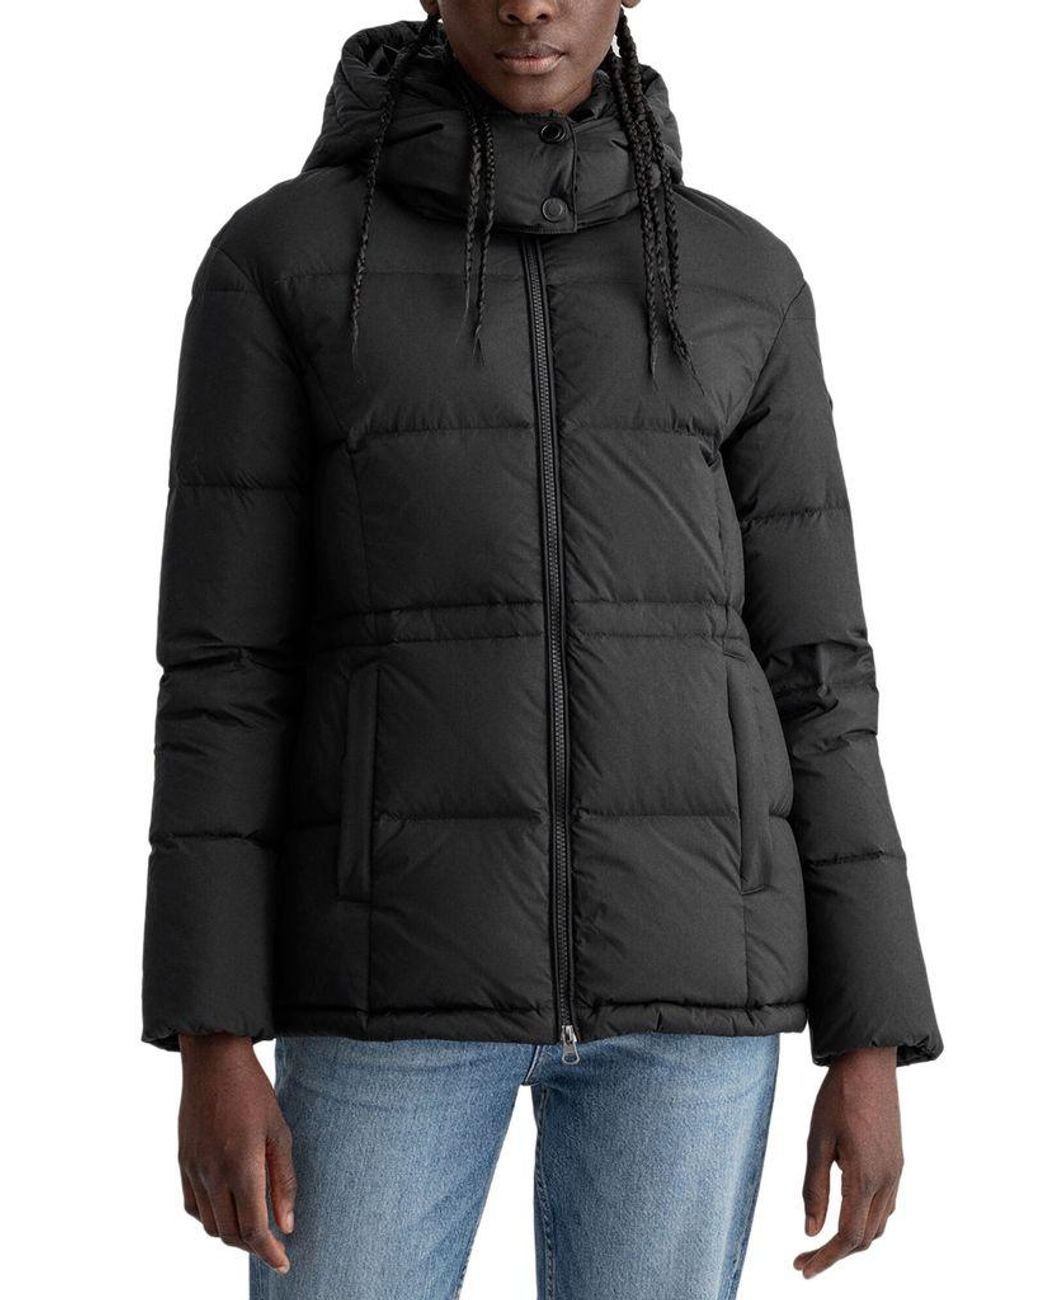 GANT Jackets & Coats 2103.4700187 5 in Black - Lyst